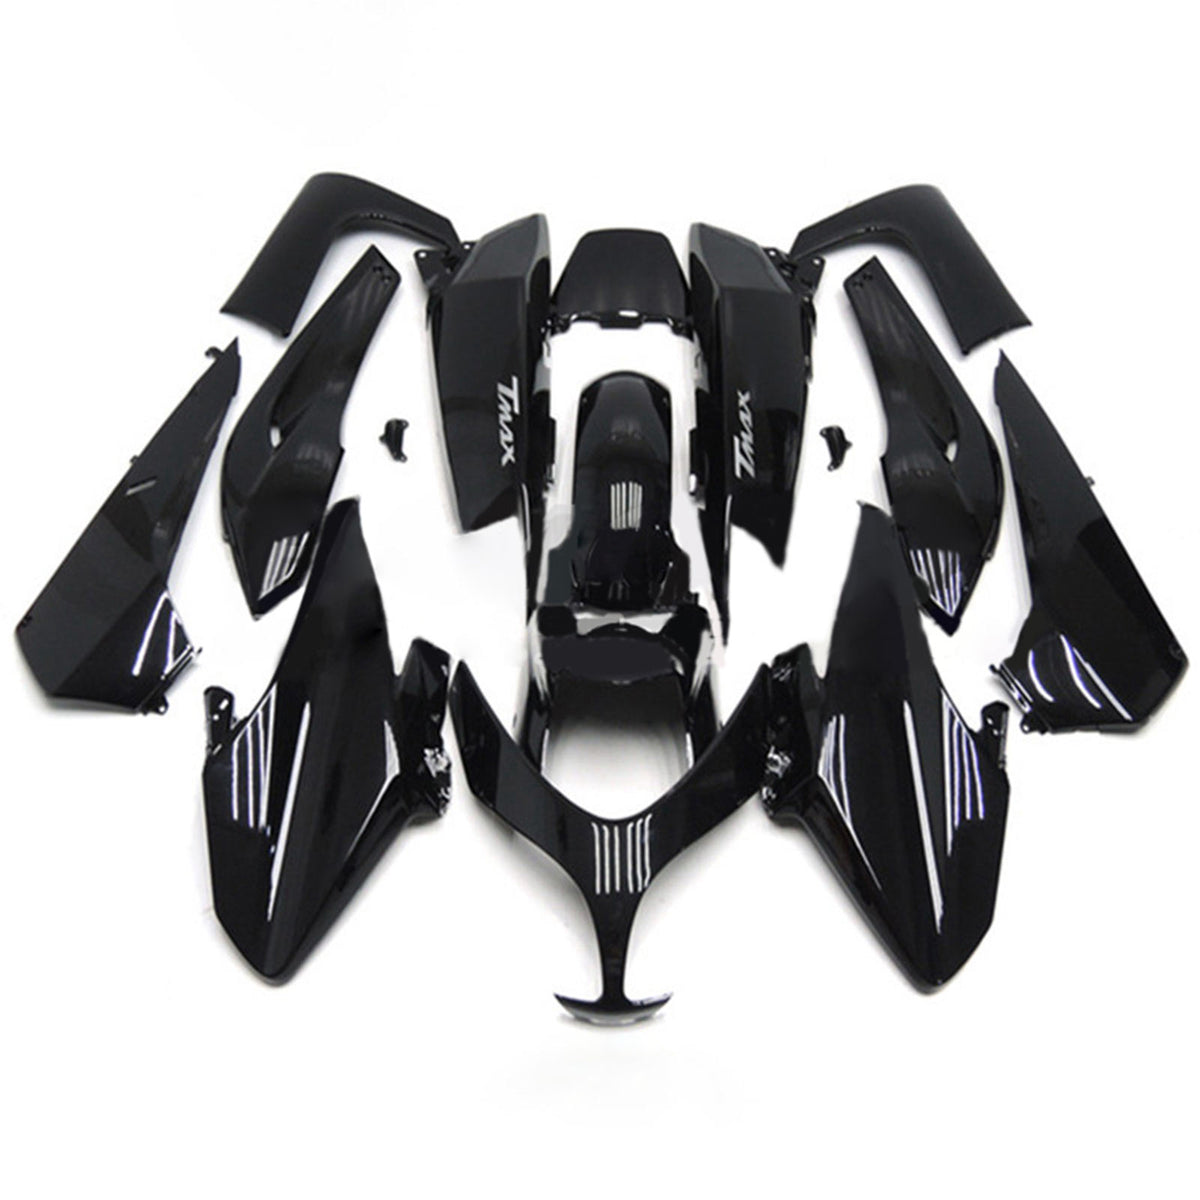 Amotopart 2008-2012 T-Max XP500 Yamaha Gloss Black Fairing Kit